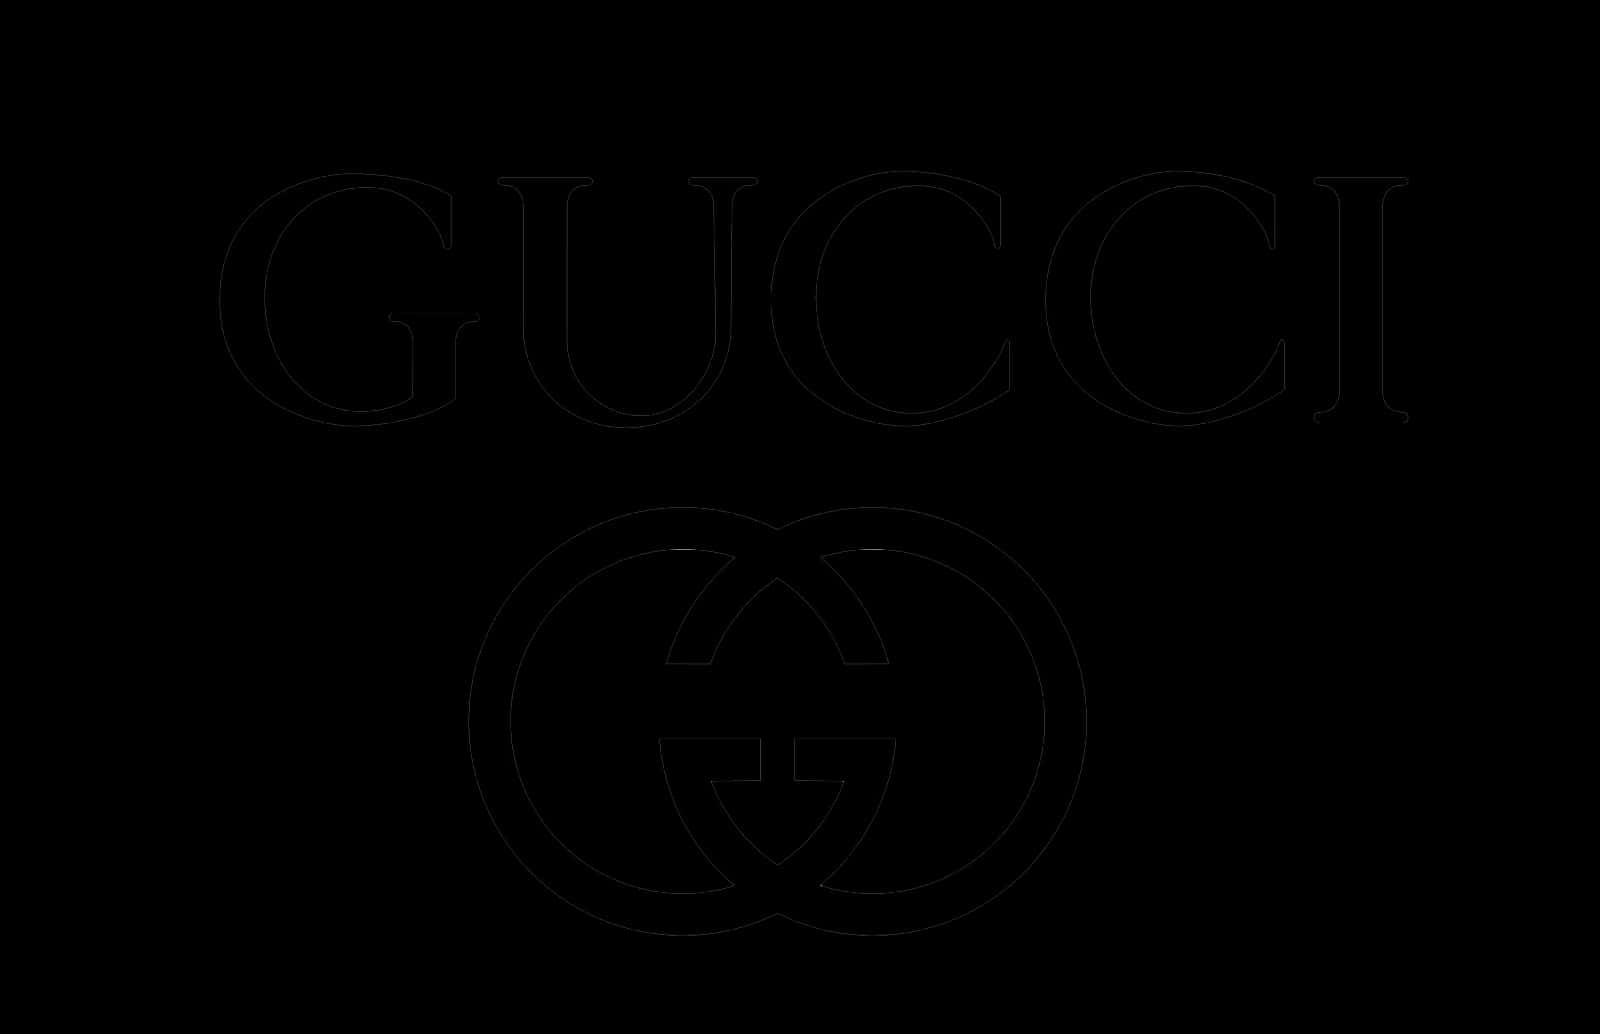 [100+] Gucci Logo Png Images | Wallpapers.com